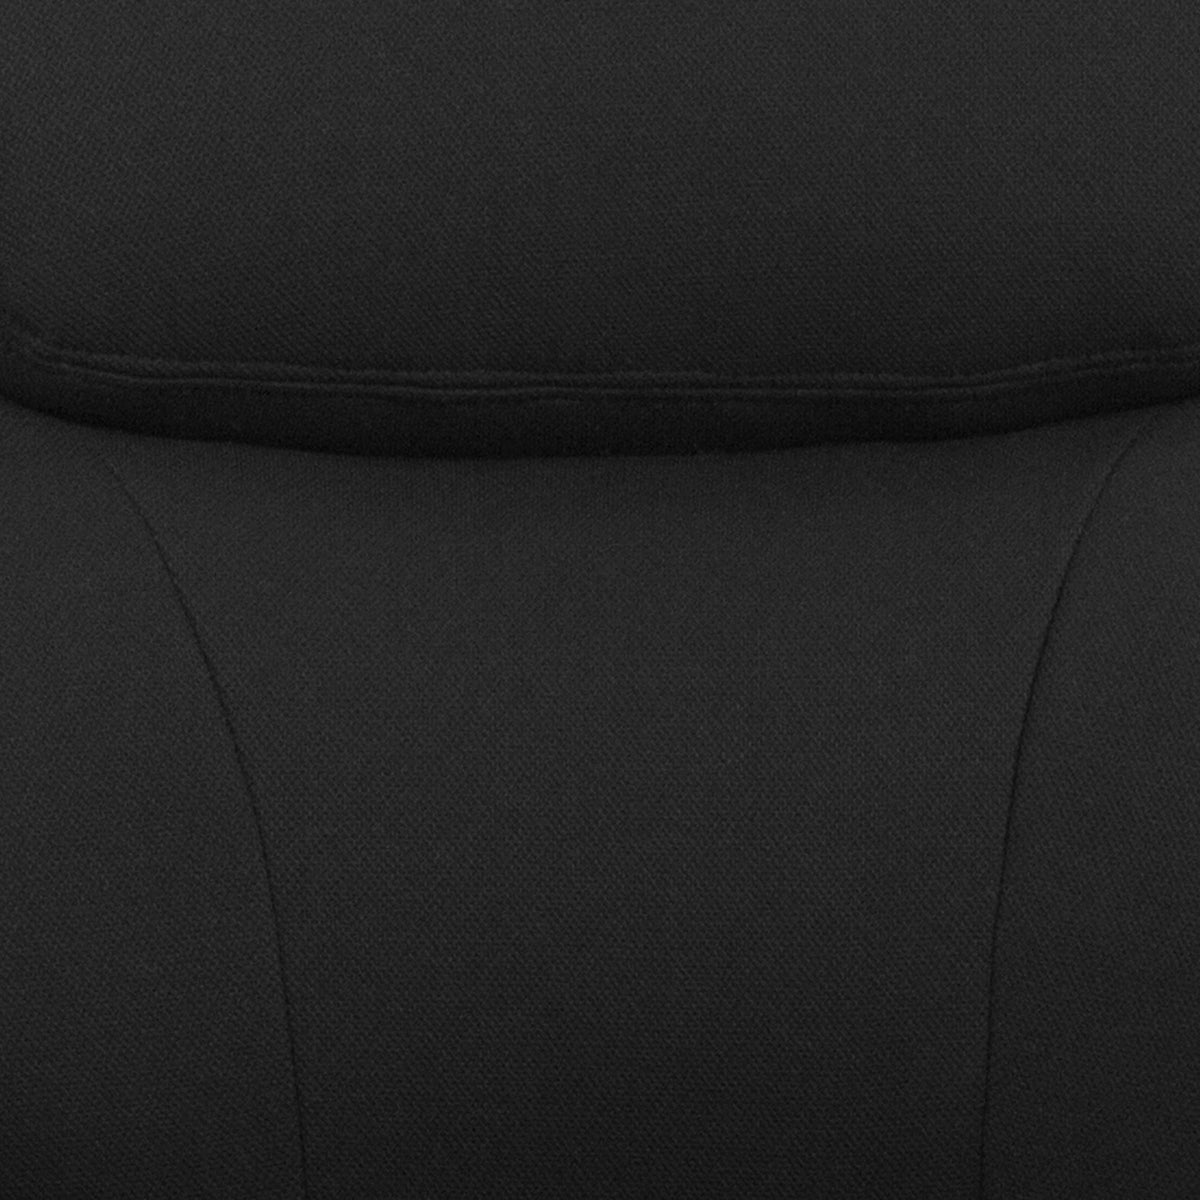 Black Fabric |#| Big & Tall 400 lb. Rated Mid-Back Black Fabric Ergonomic Task Office Chair